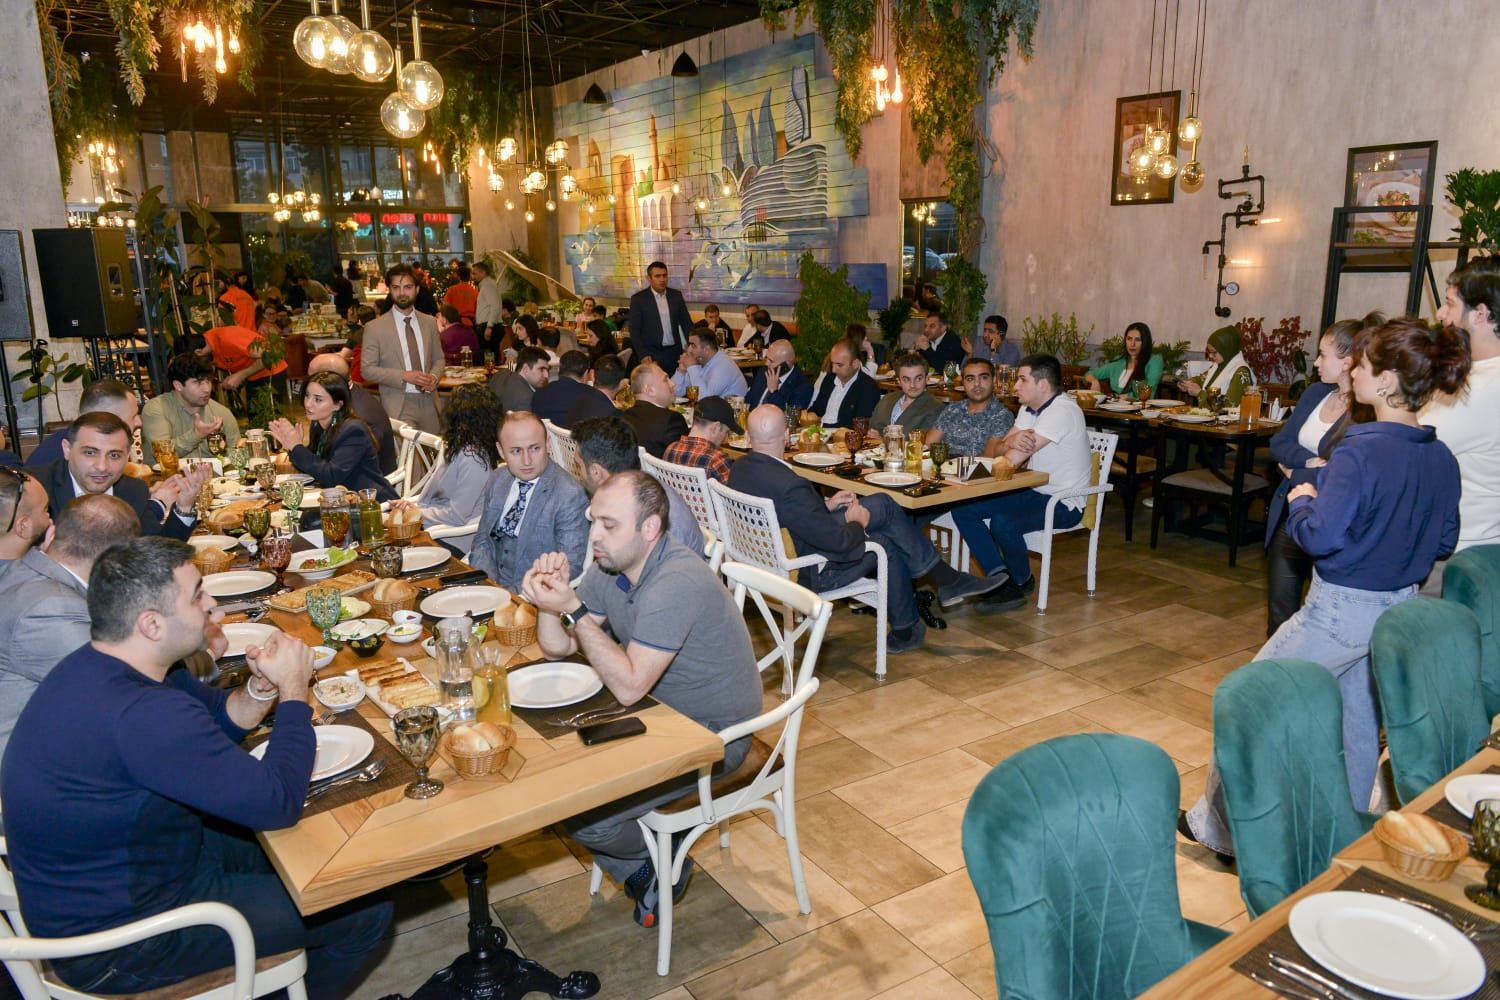 Networking Azerbaijan провел для предпринимателей вечер в честь праздника Рамазан (ФОТО)